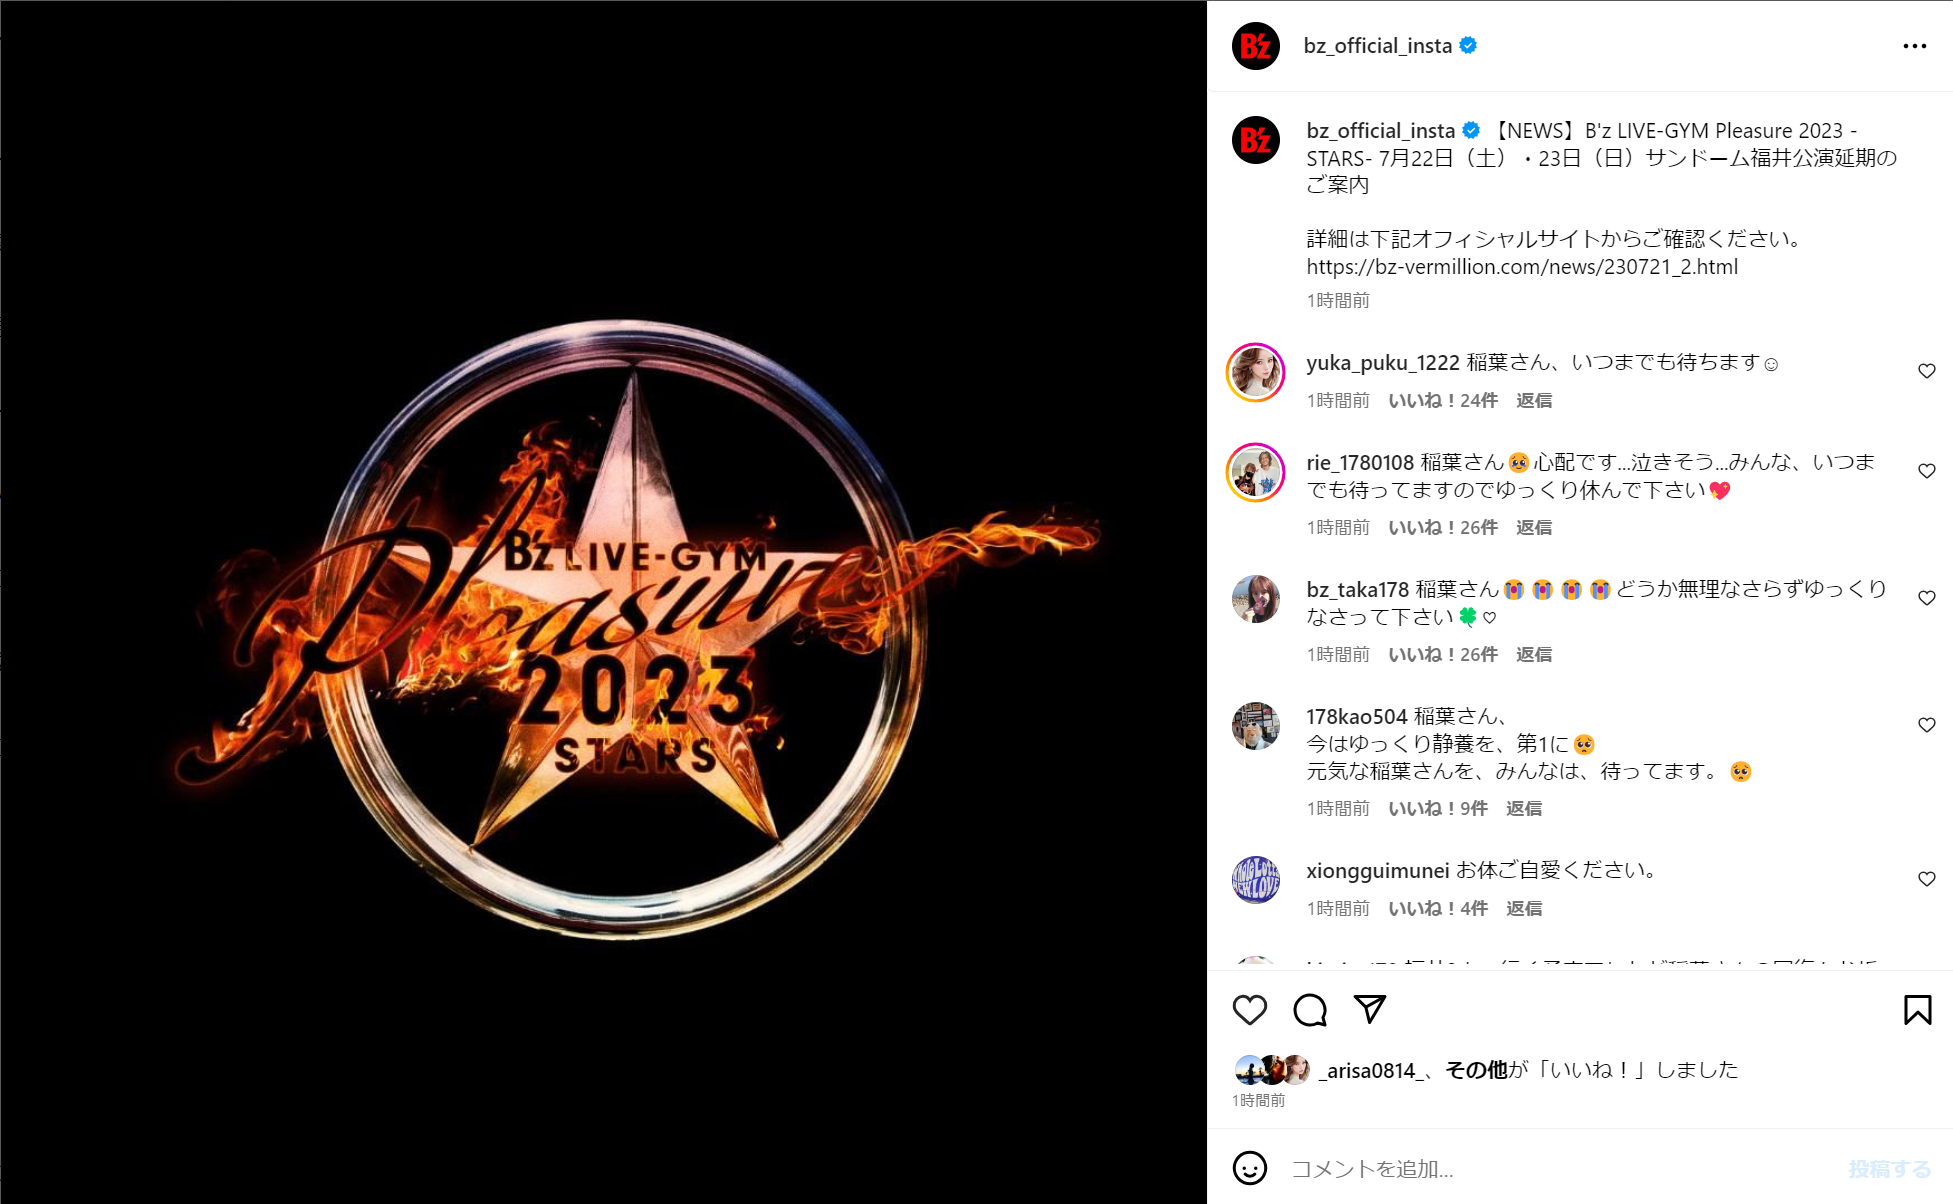 『B'z LIVE-GYM Pleasure 2023 -STARS-』福井公演の中止・延期を伝える公式Instagamの投稿